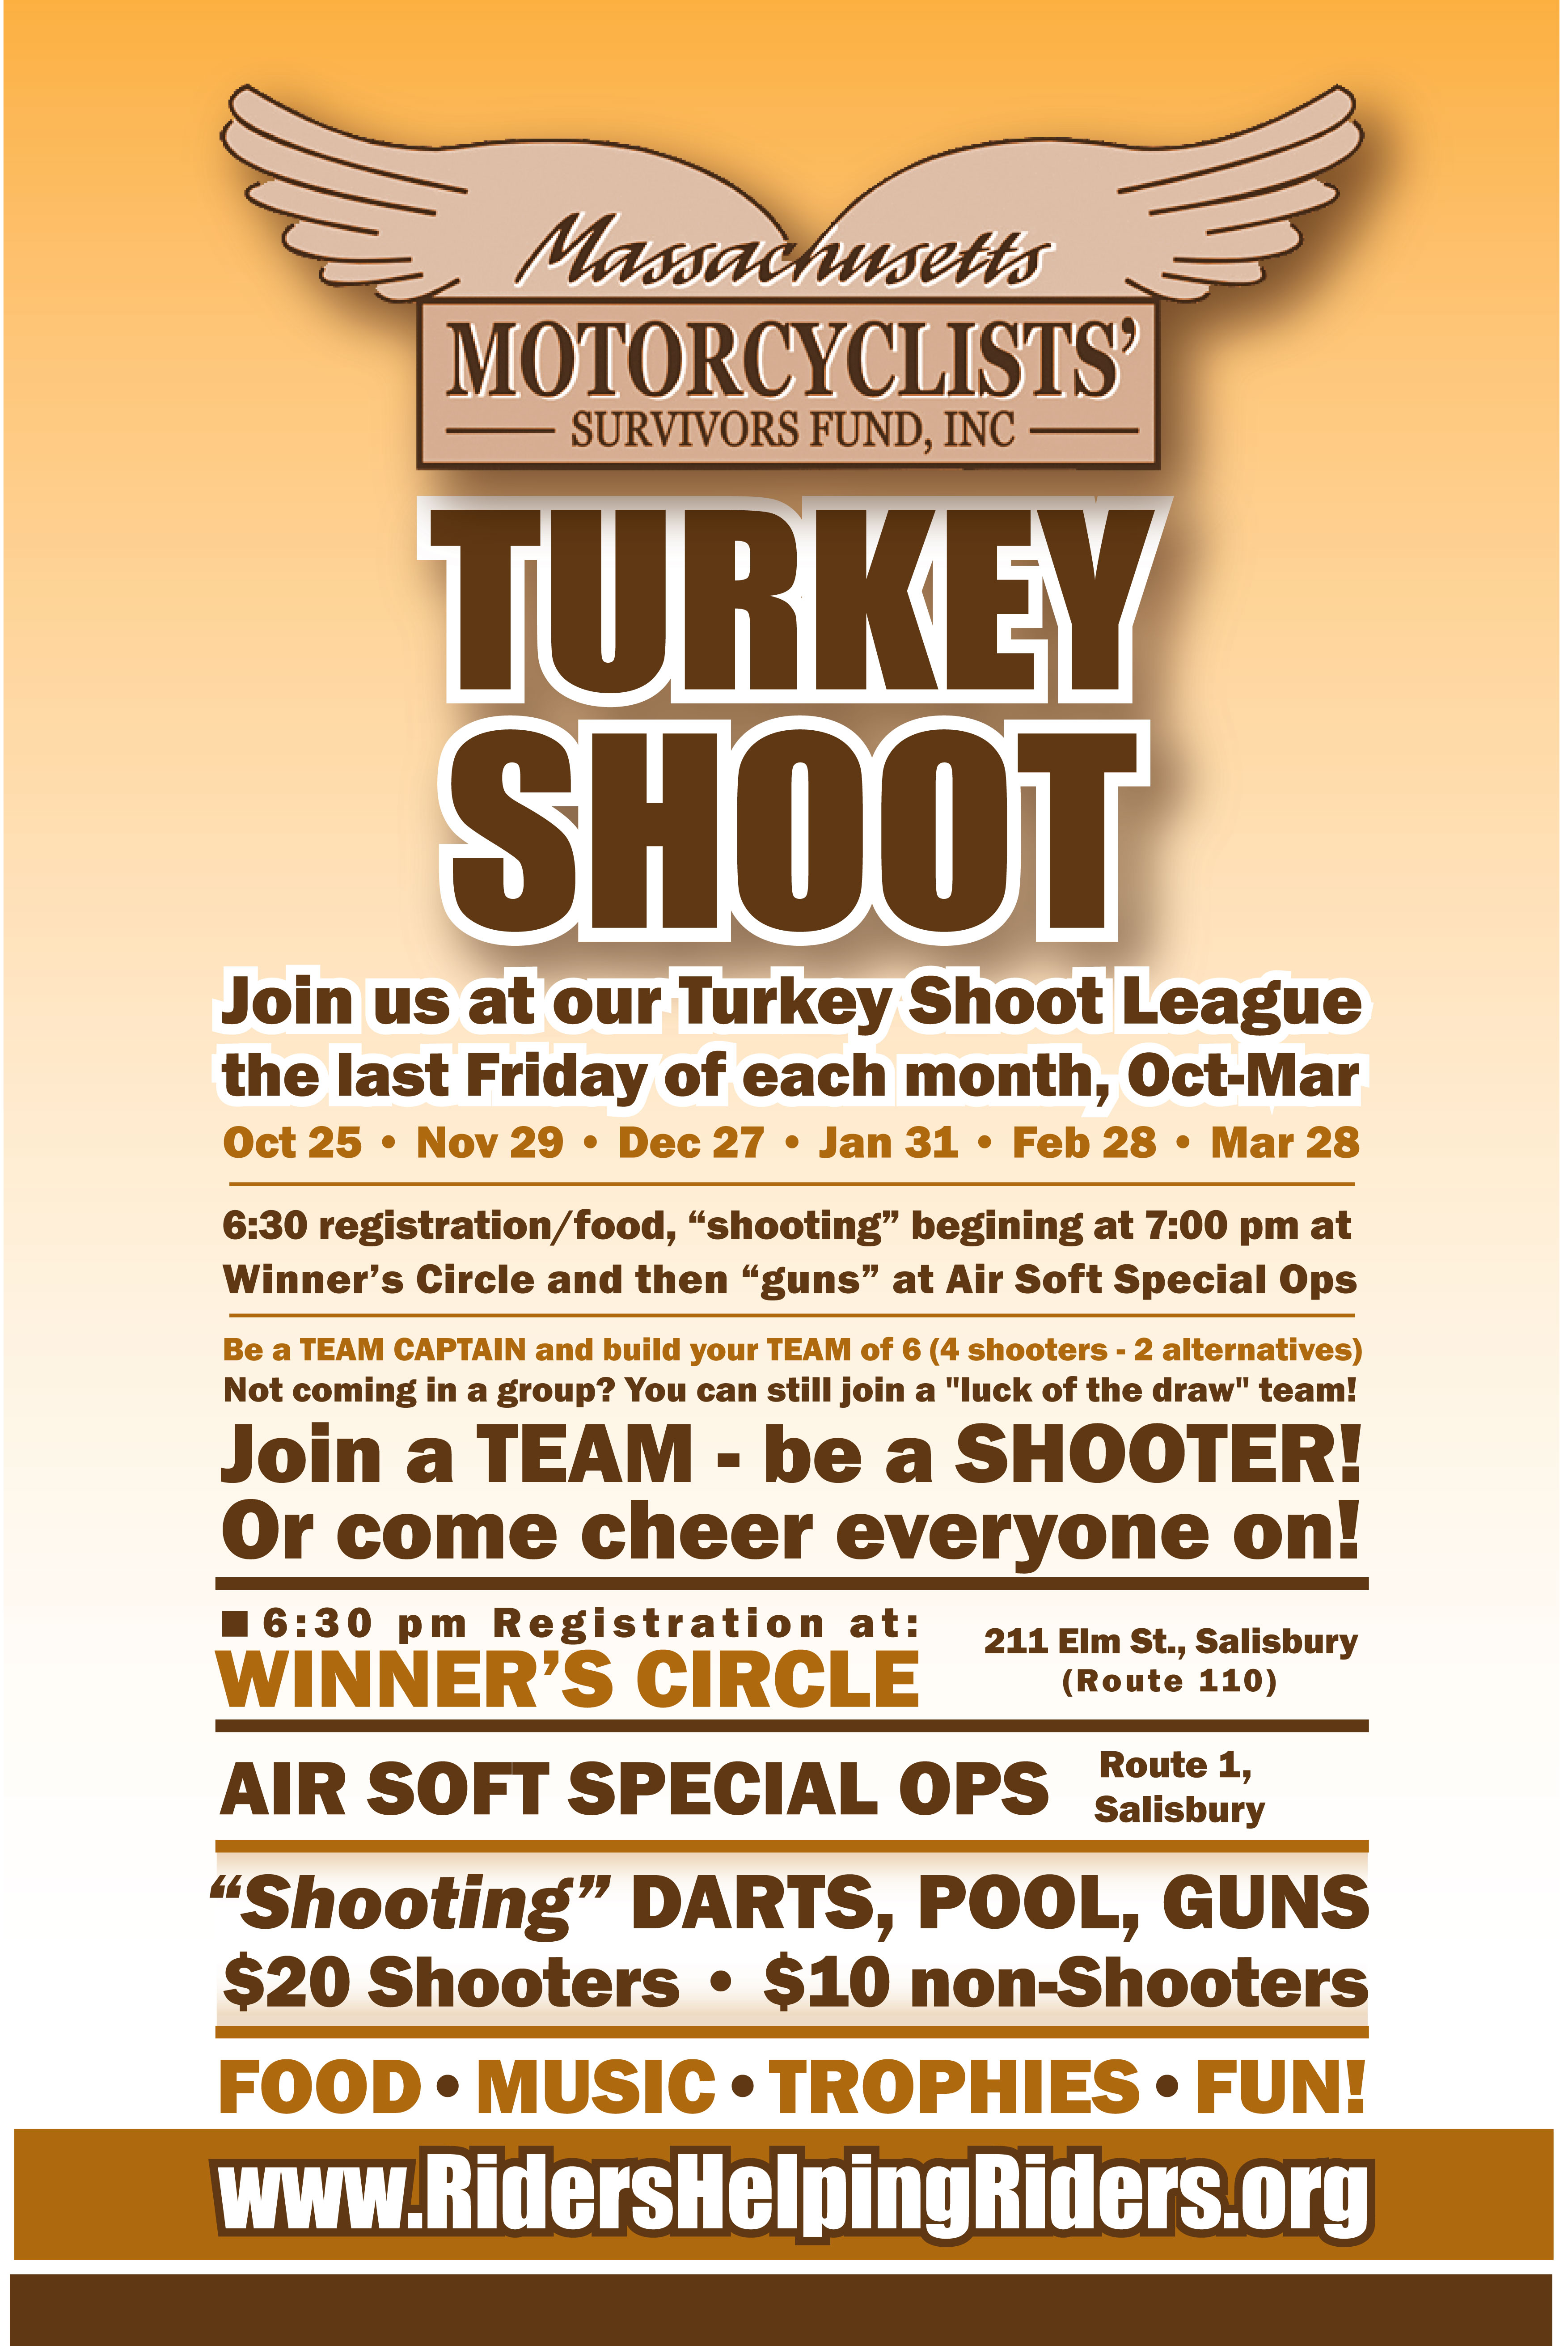 mmsf-turkey-shoot-league-starts-october-25th-riders-helping-riders